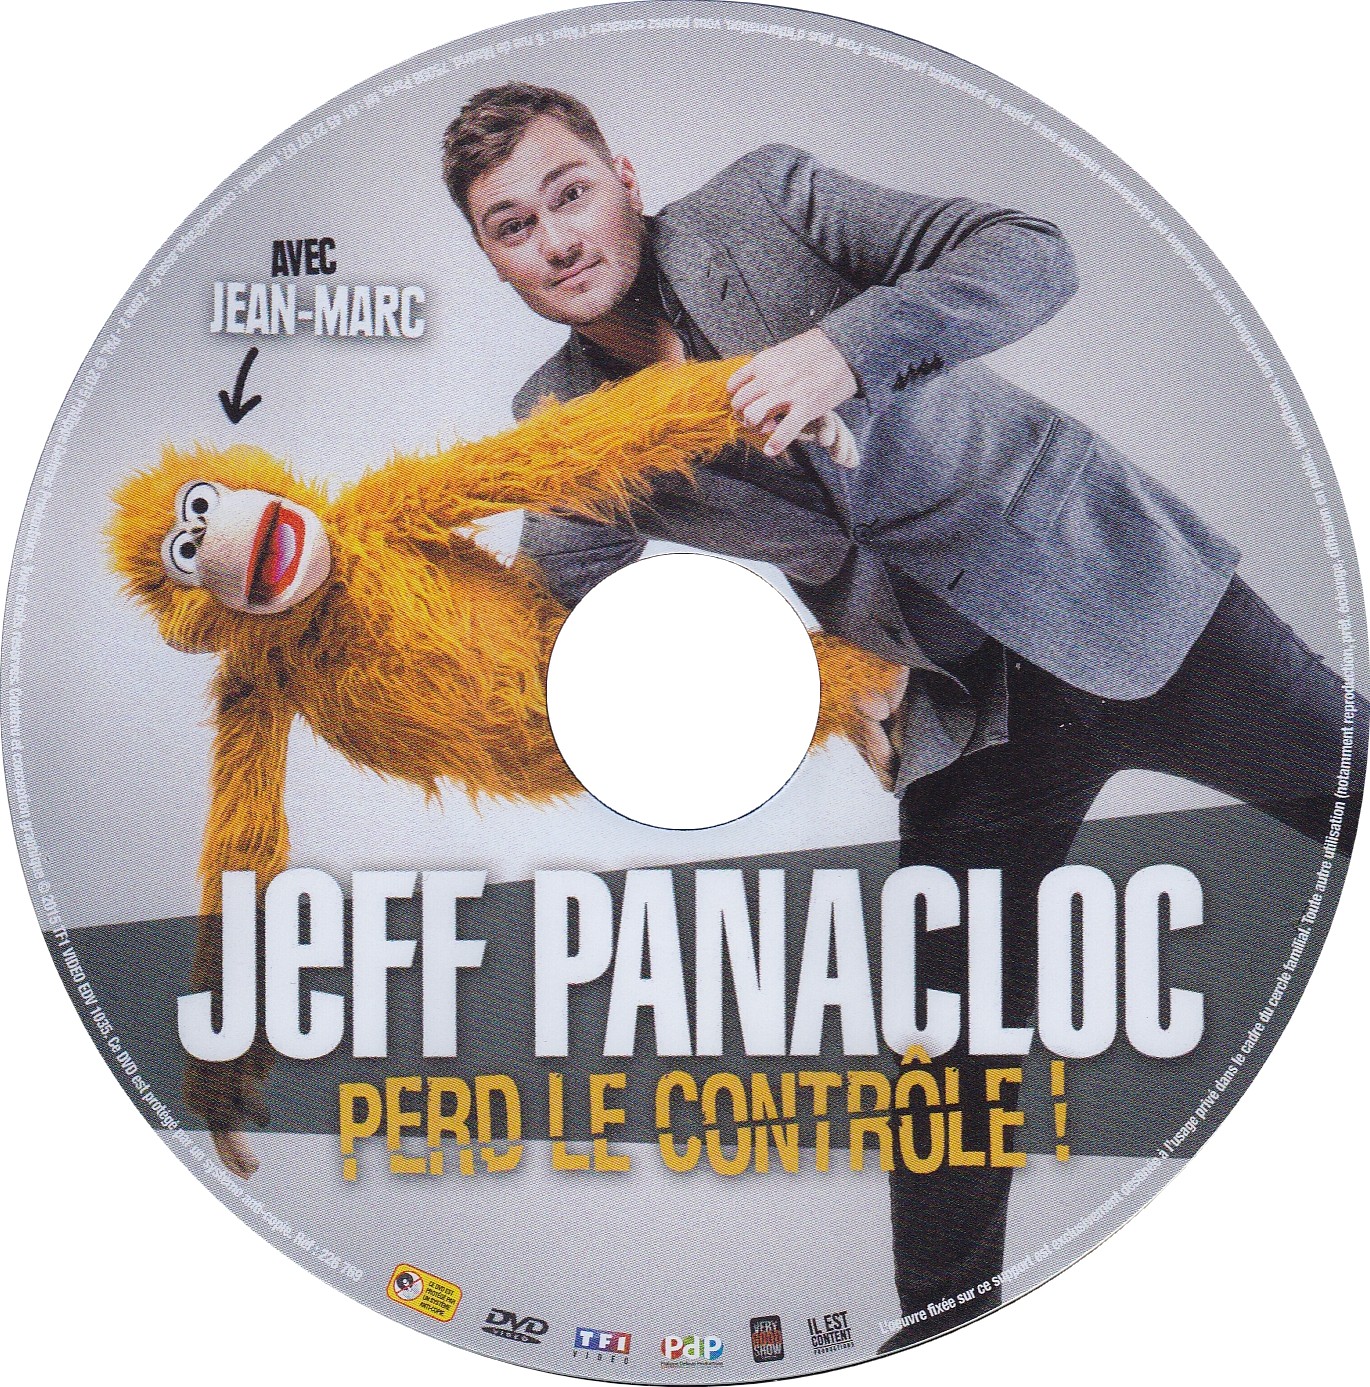 Jeff Panacloc perd le controle